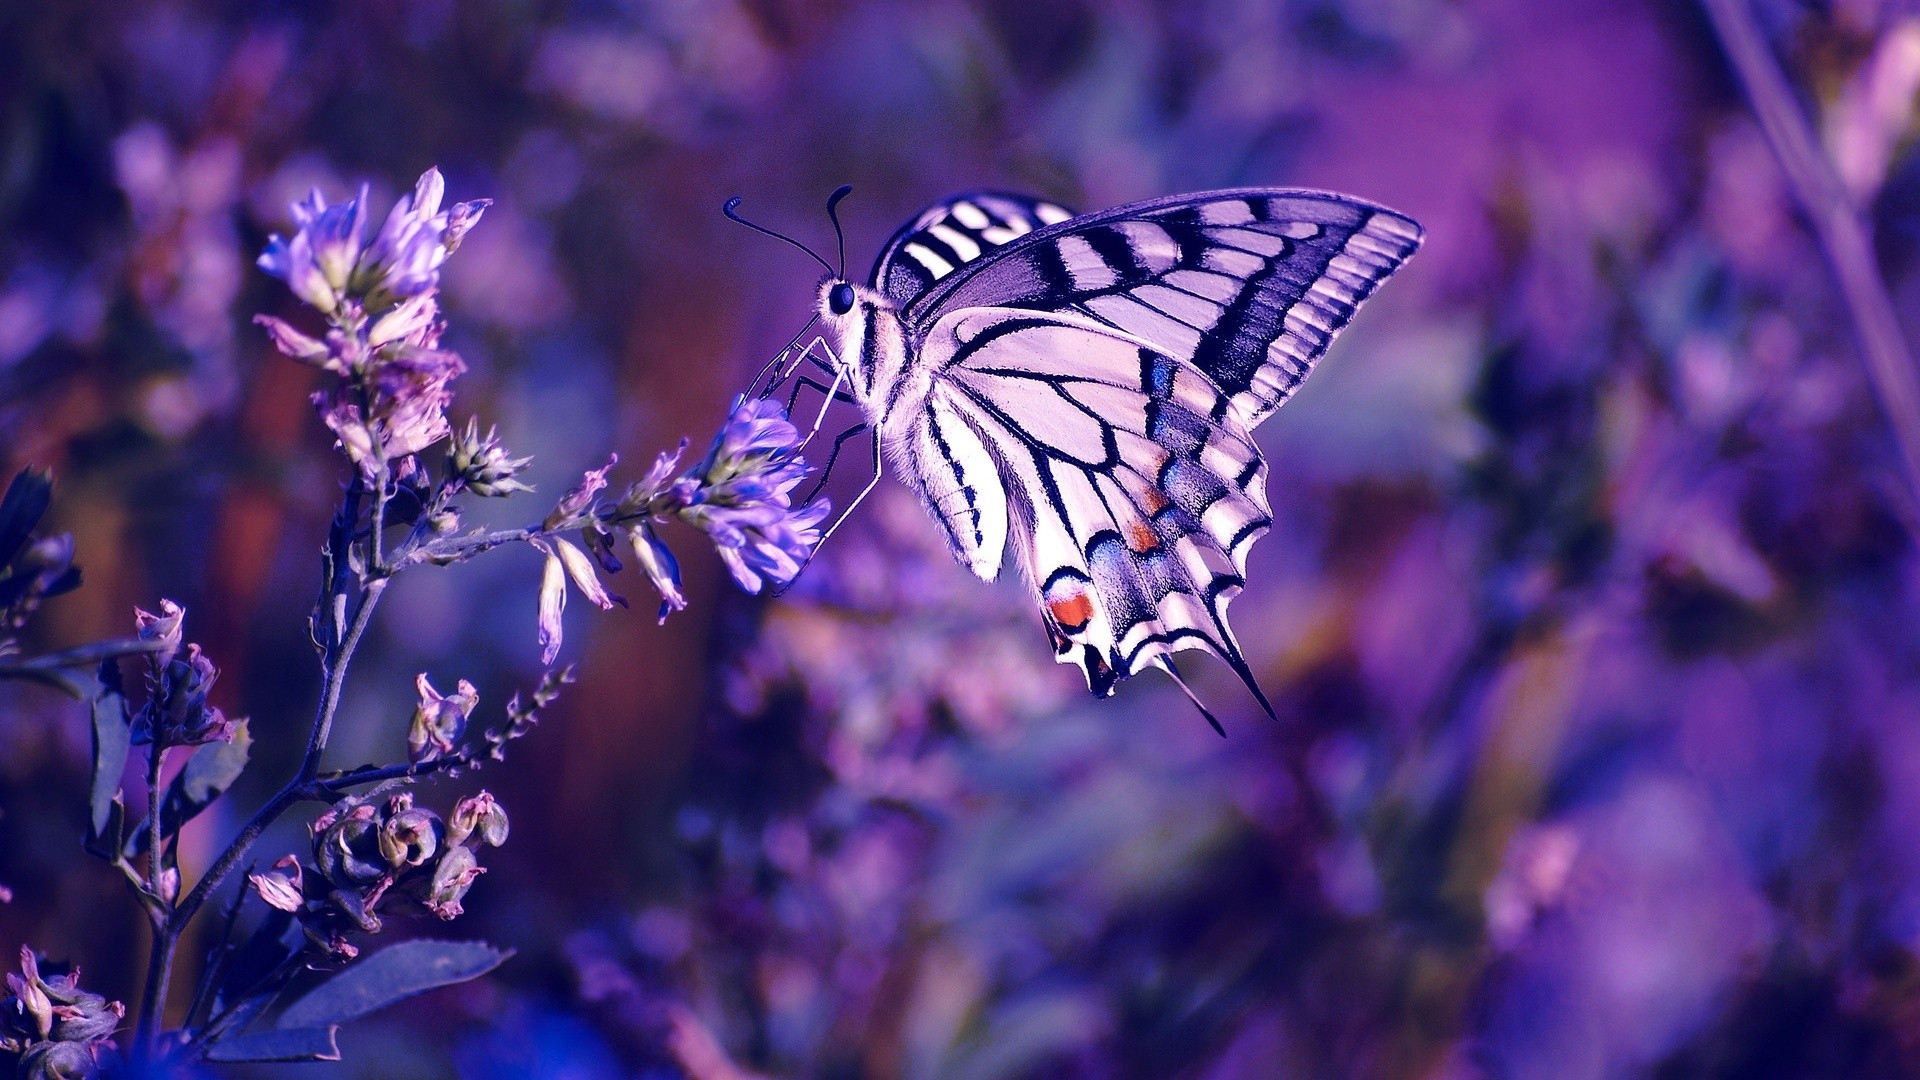 Butterfly Wallpapers HD